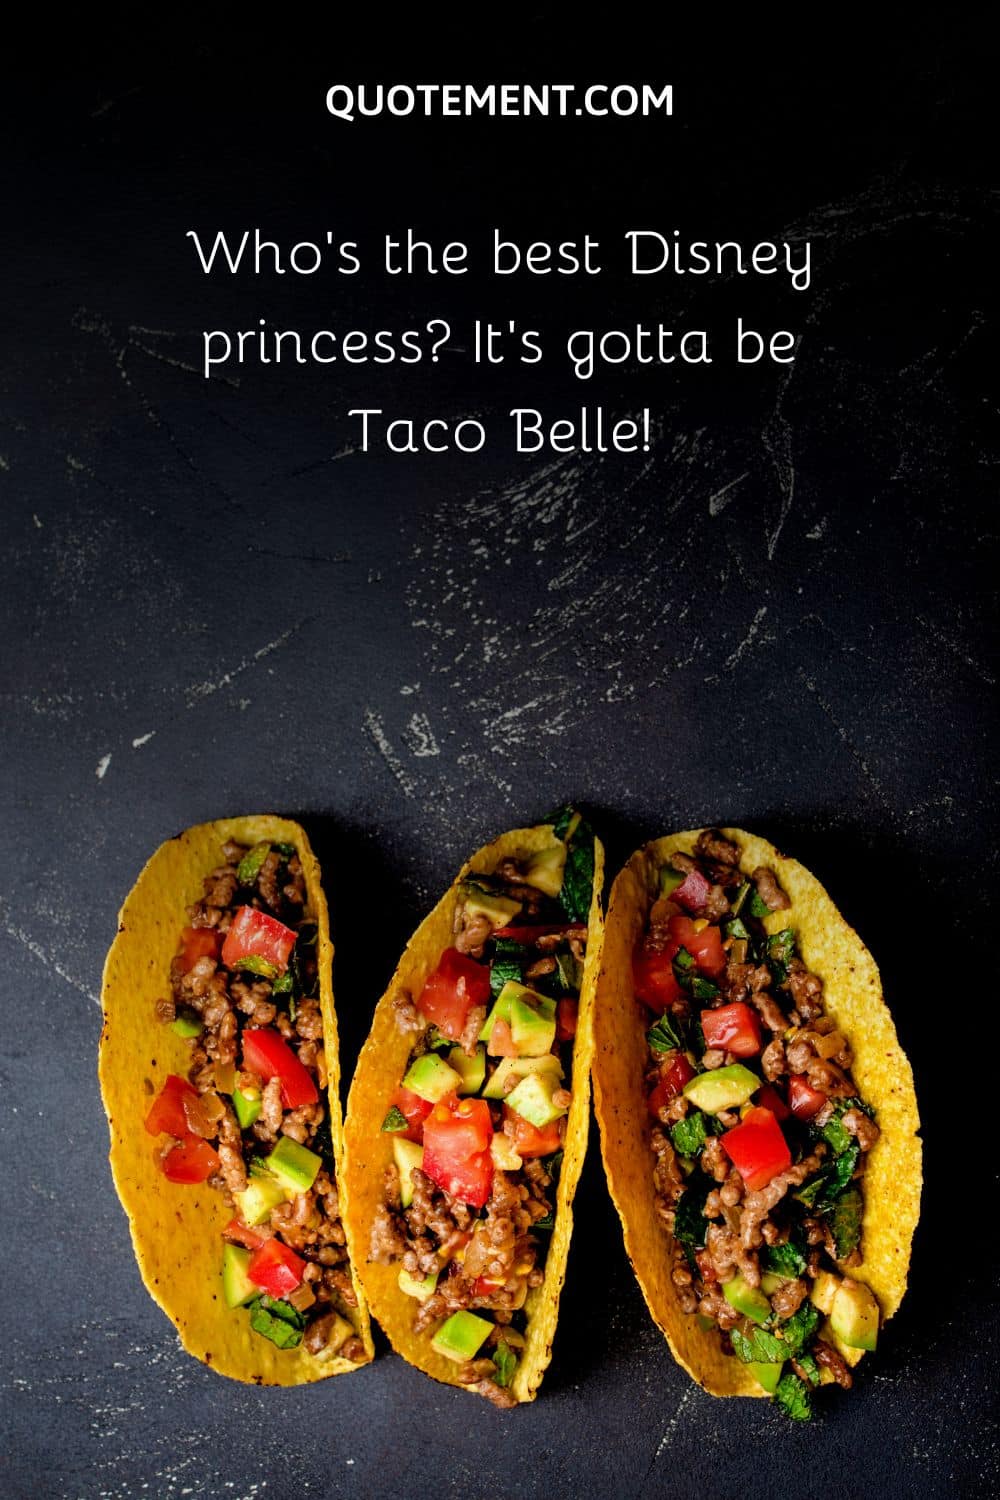 Who’s the best Disney princess It’s gotta be Taco Belle